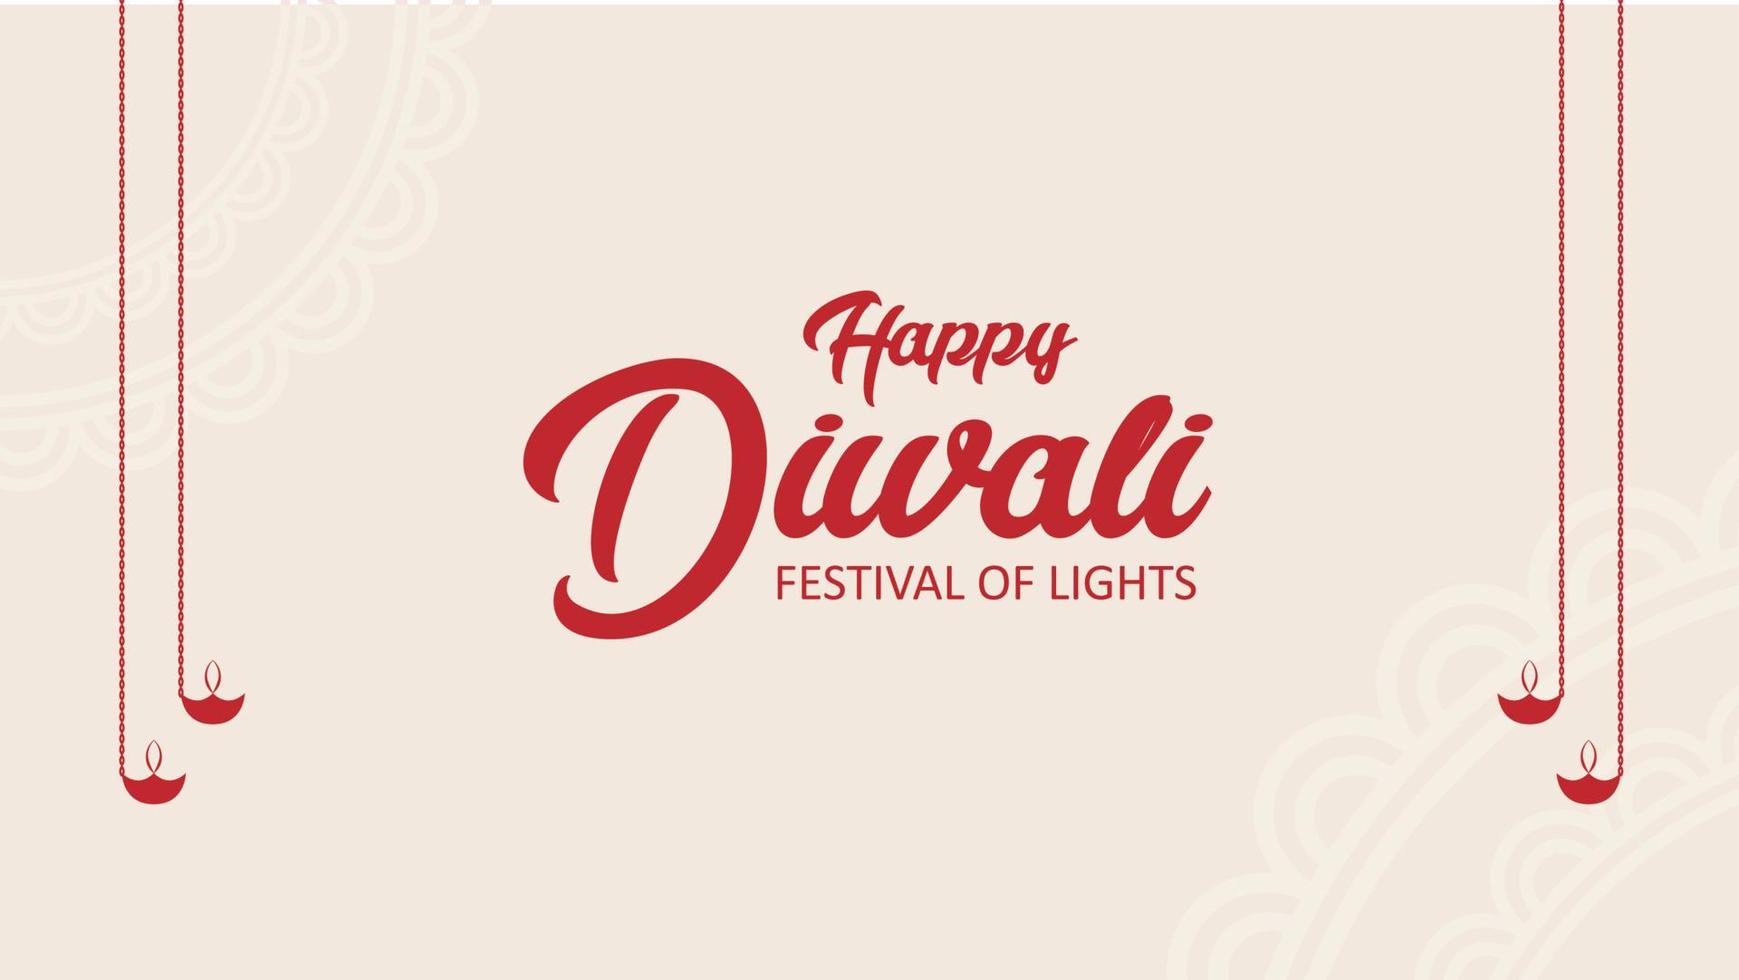 Happy Diwali Greetings Card minimalistic style vector